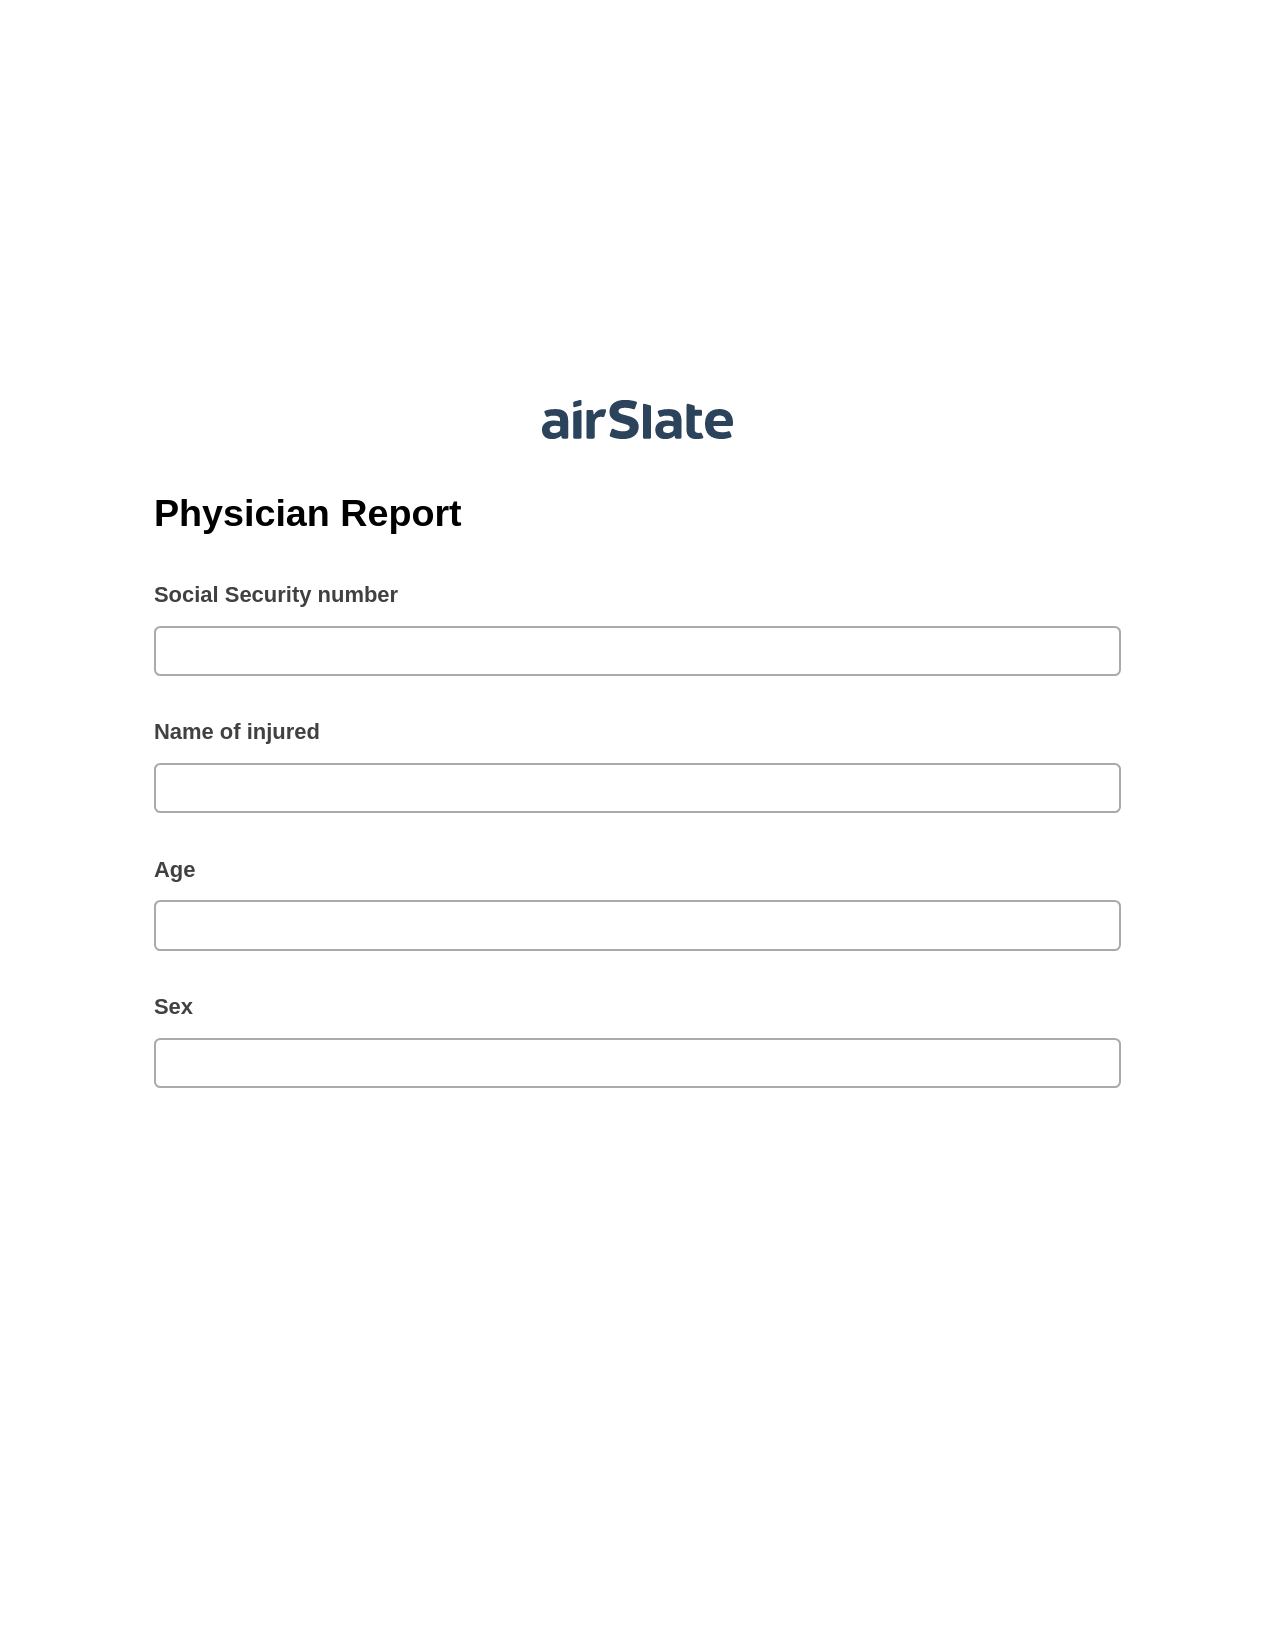 Physician Report Prefill from NetSuite records, Invoke Salesforce Process Bot, Slack Notification Postfinish Bot